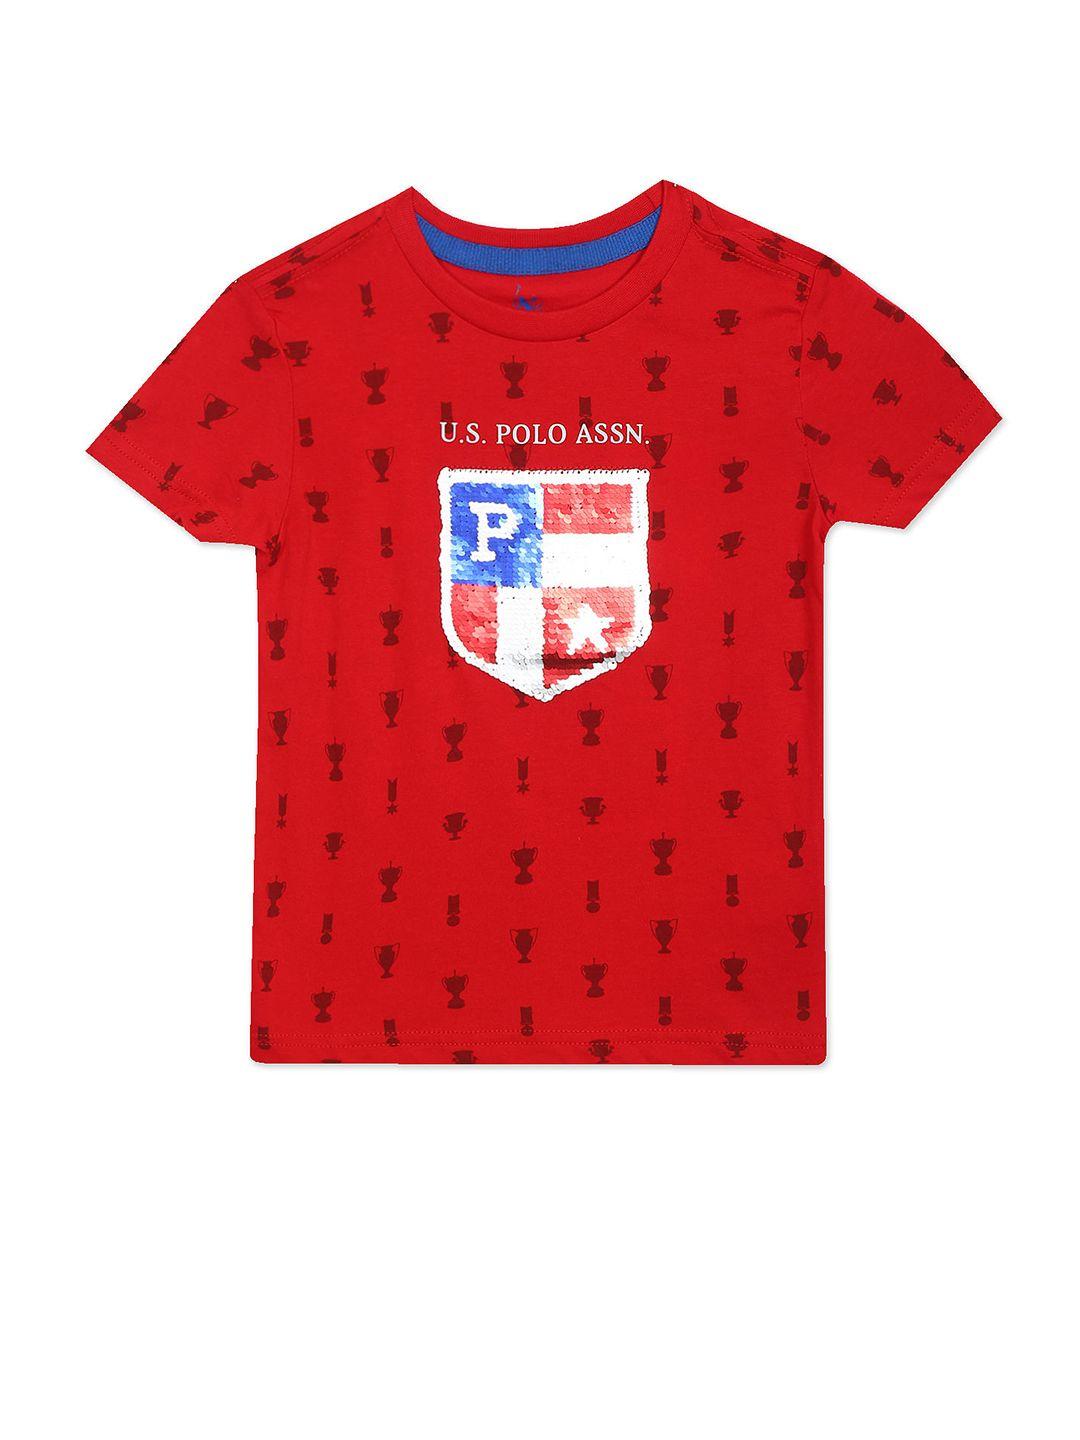 u-s-polo-assn-boys-red-printed-cotton-t-shirt